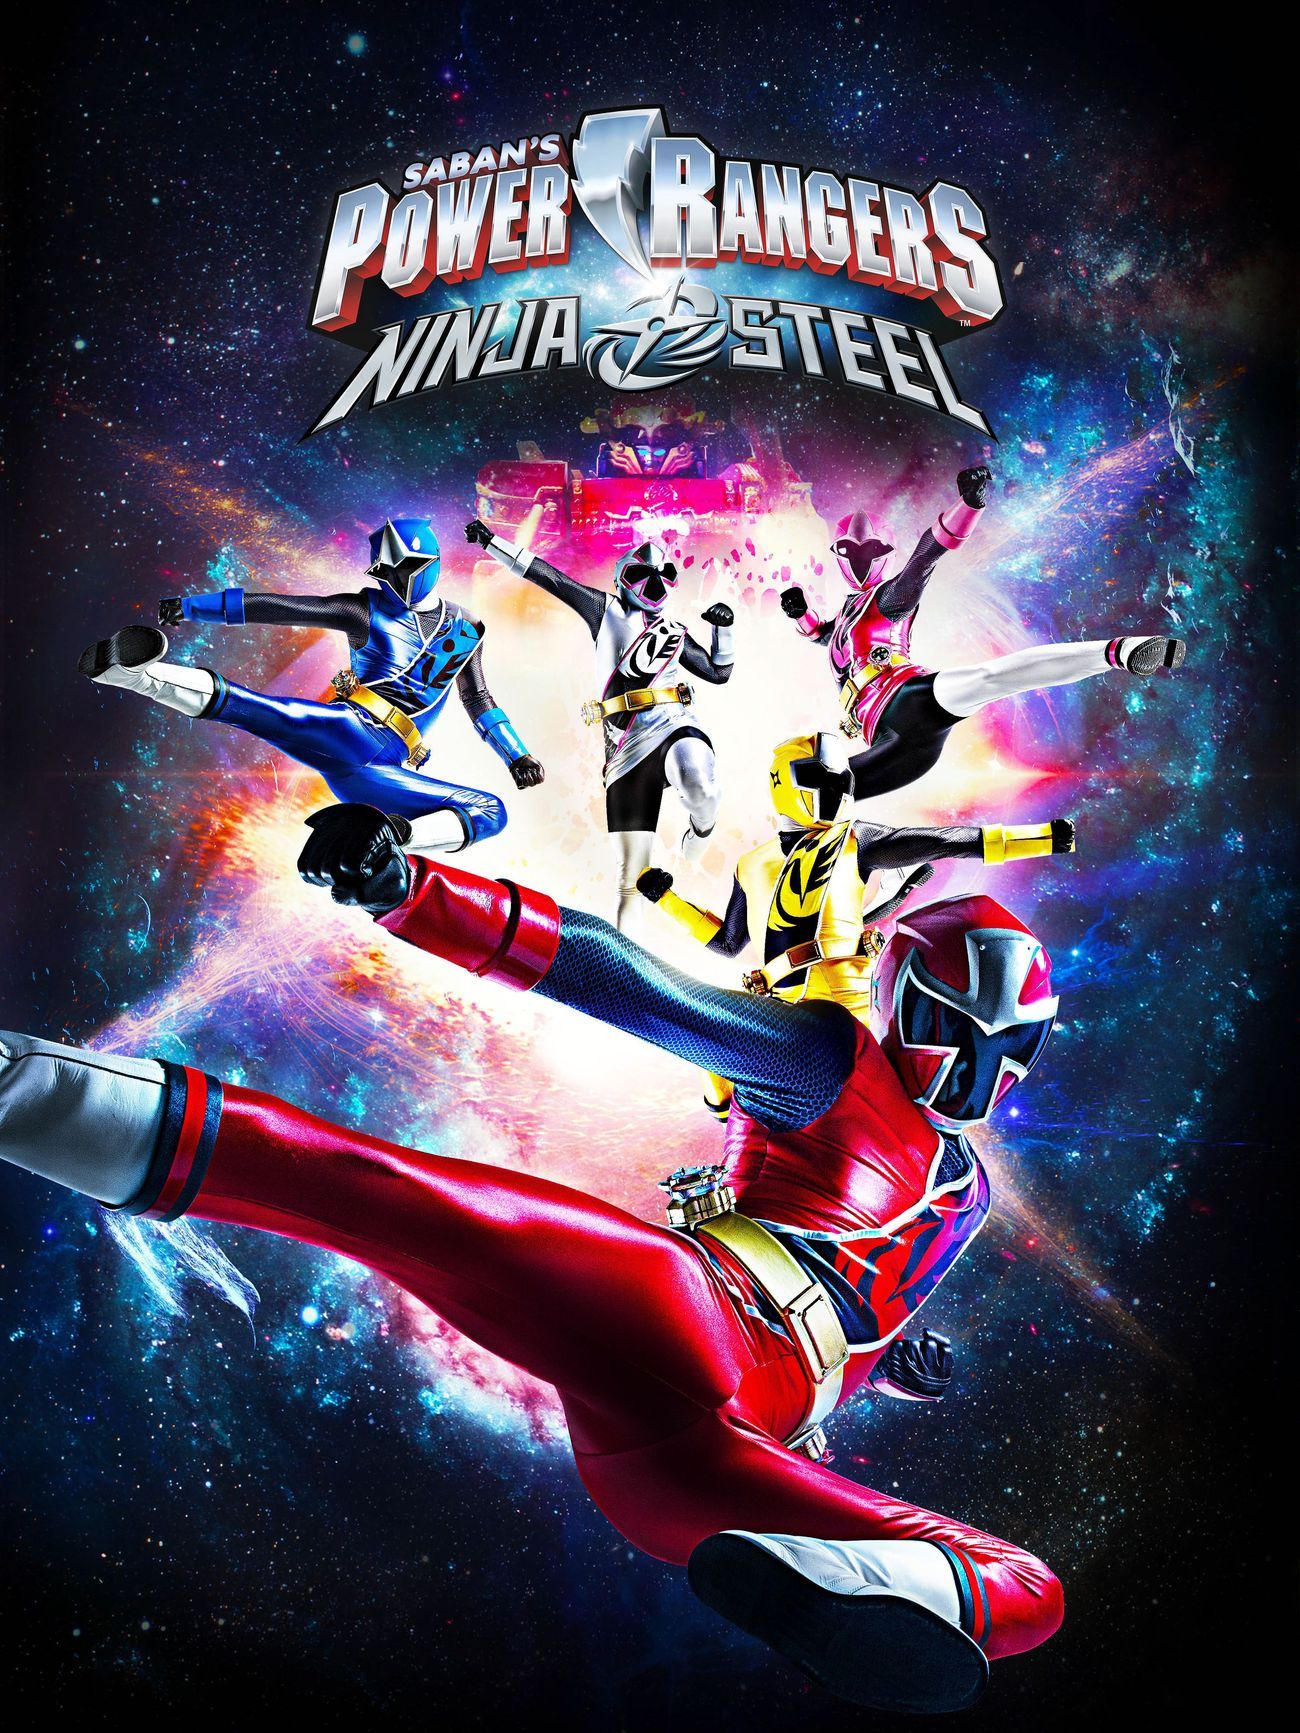 Power Rangers Ninja Steel TV Show: News, Videos, Full Episodes and More